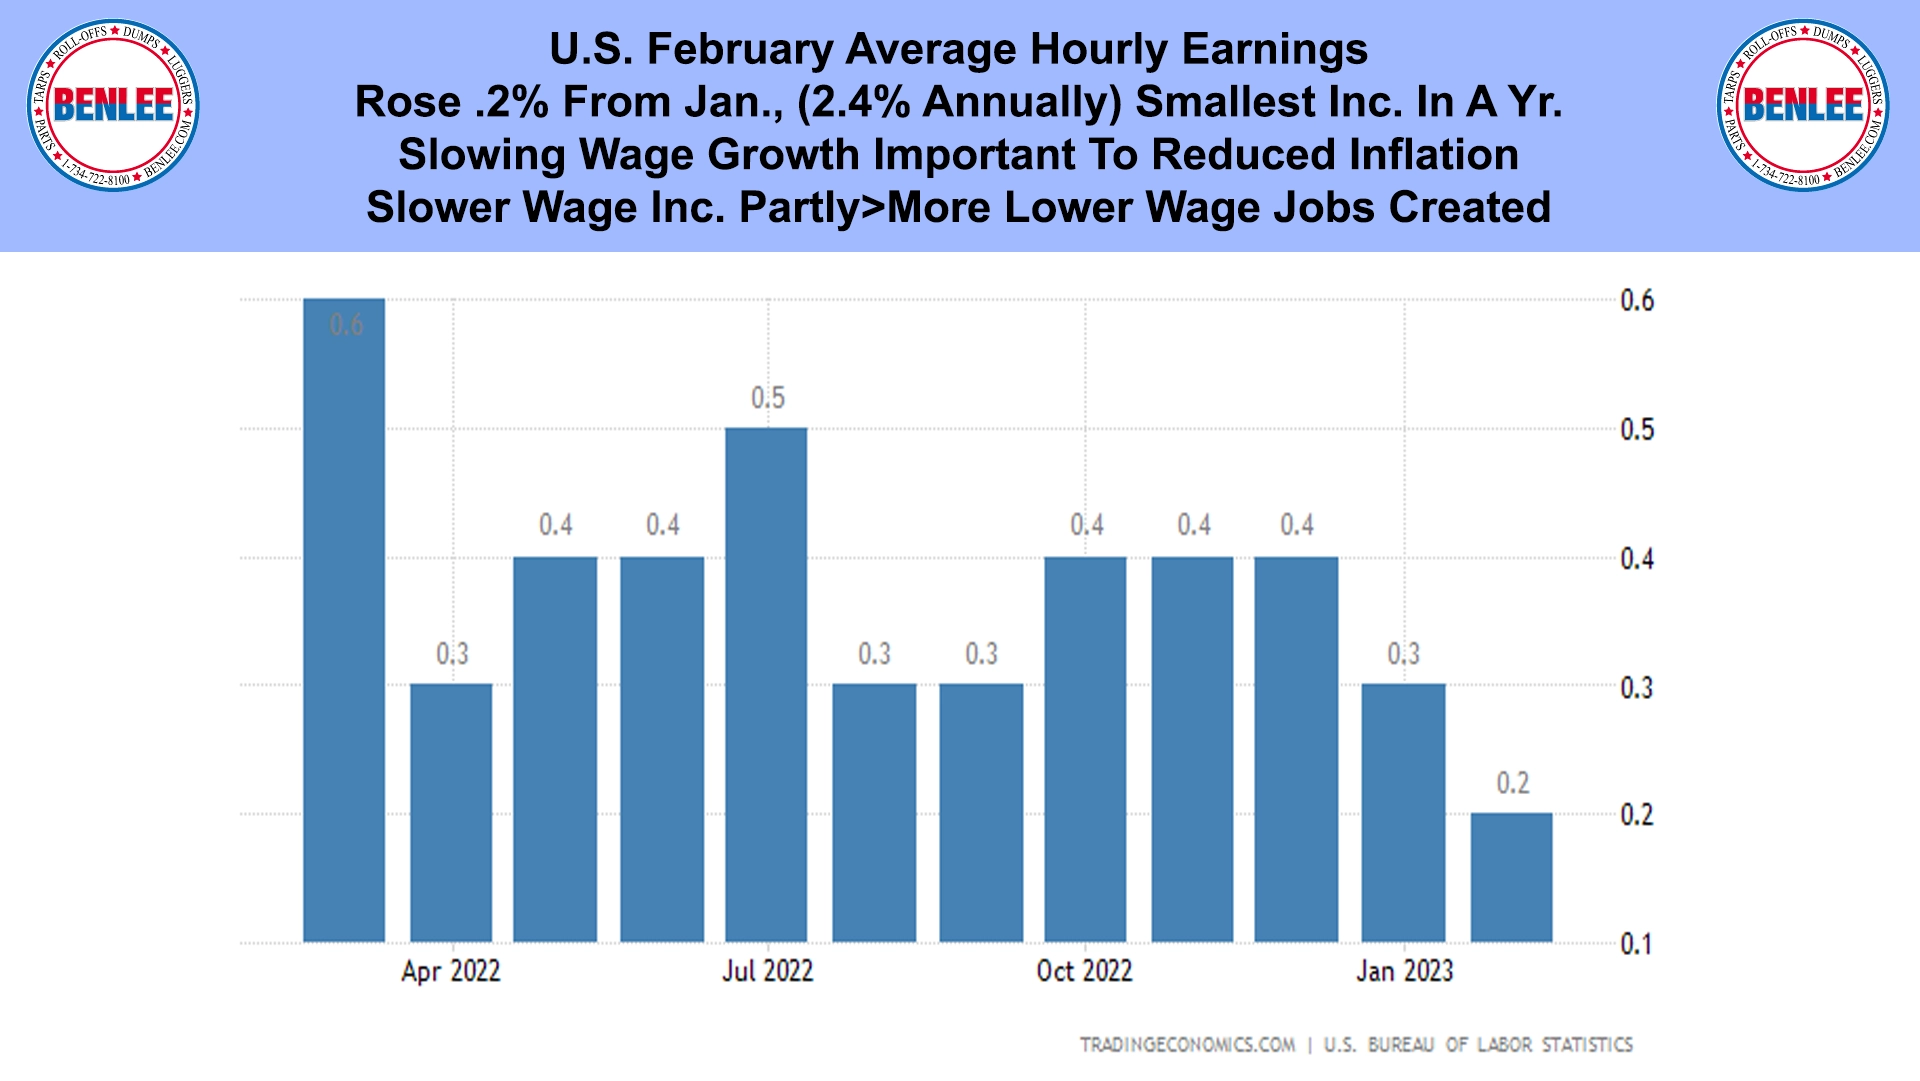 U.S. February Average Hourly Earnings